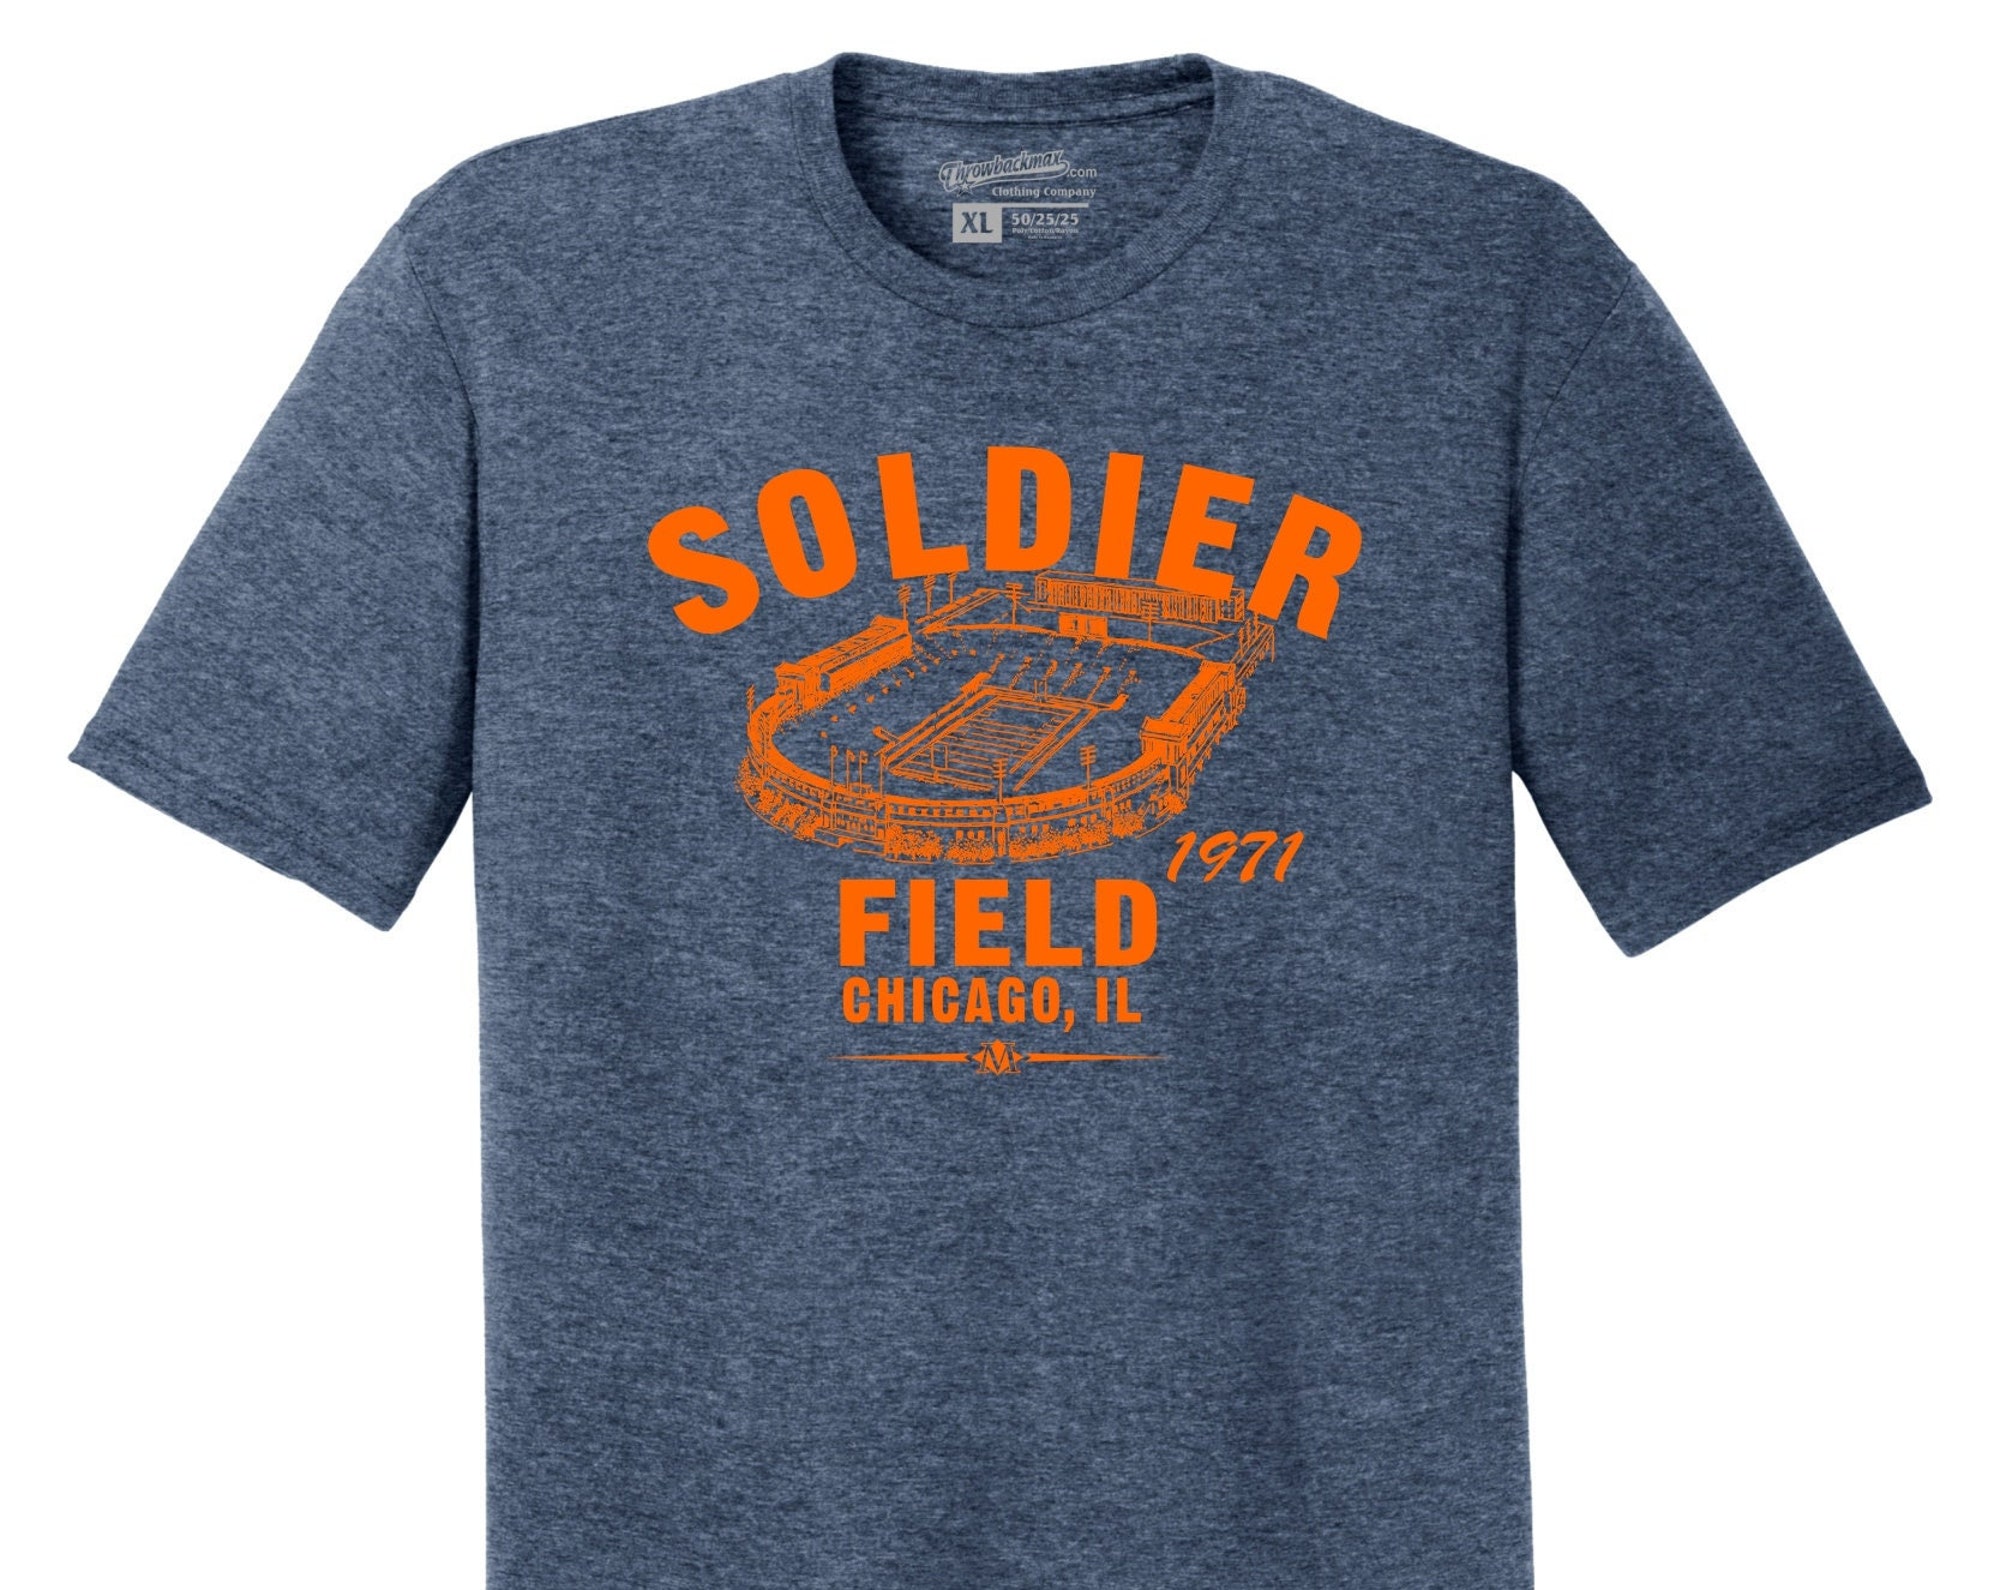 Discover Soldier Field 1971 Football Premium TRI-BLEND Tee Shirt